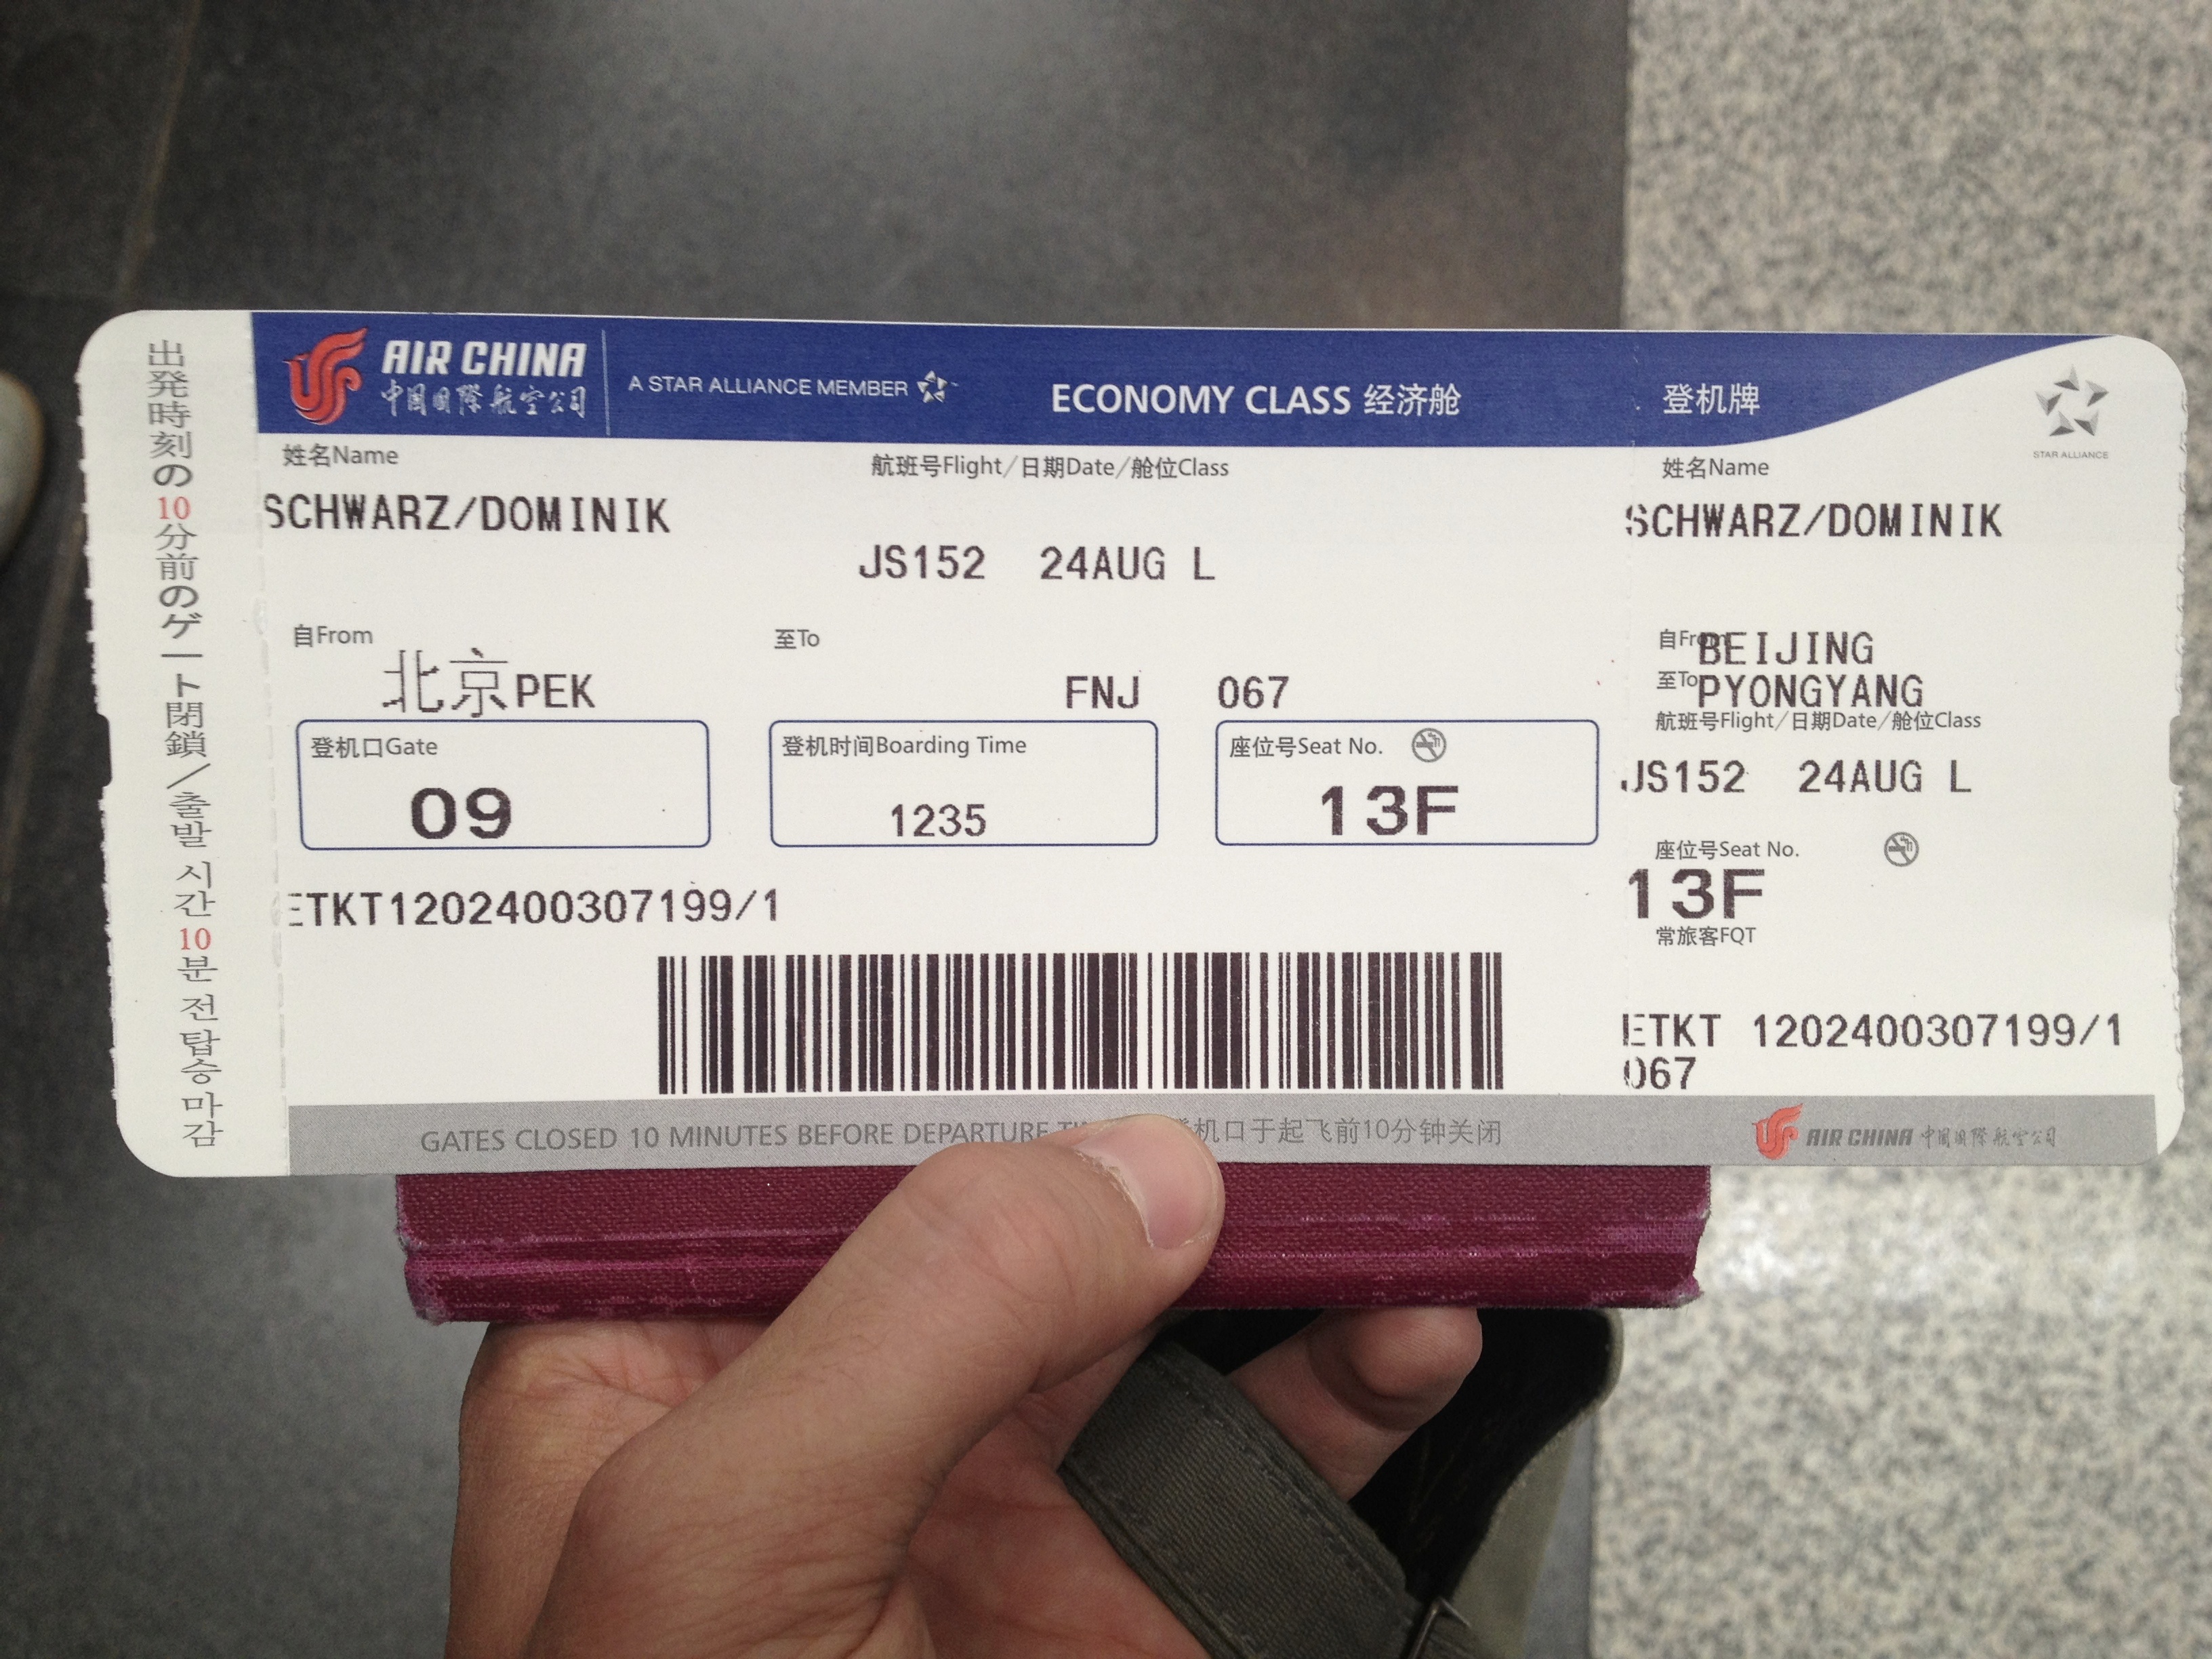 My ticket to North Korea.